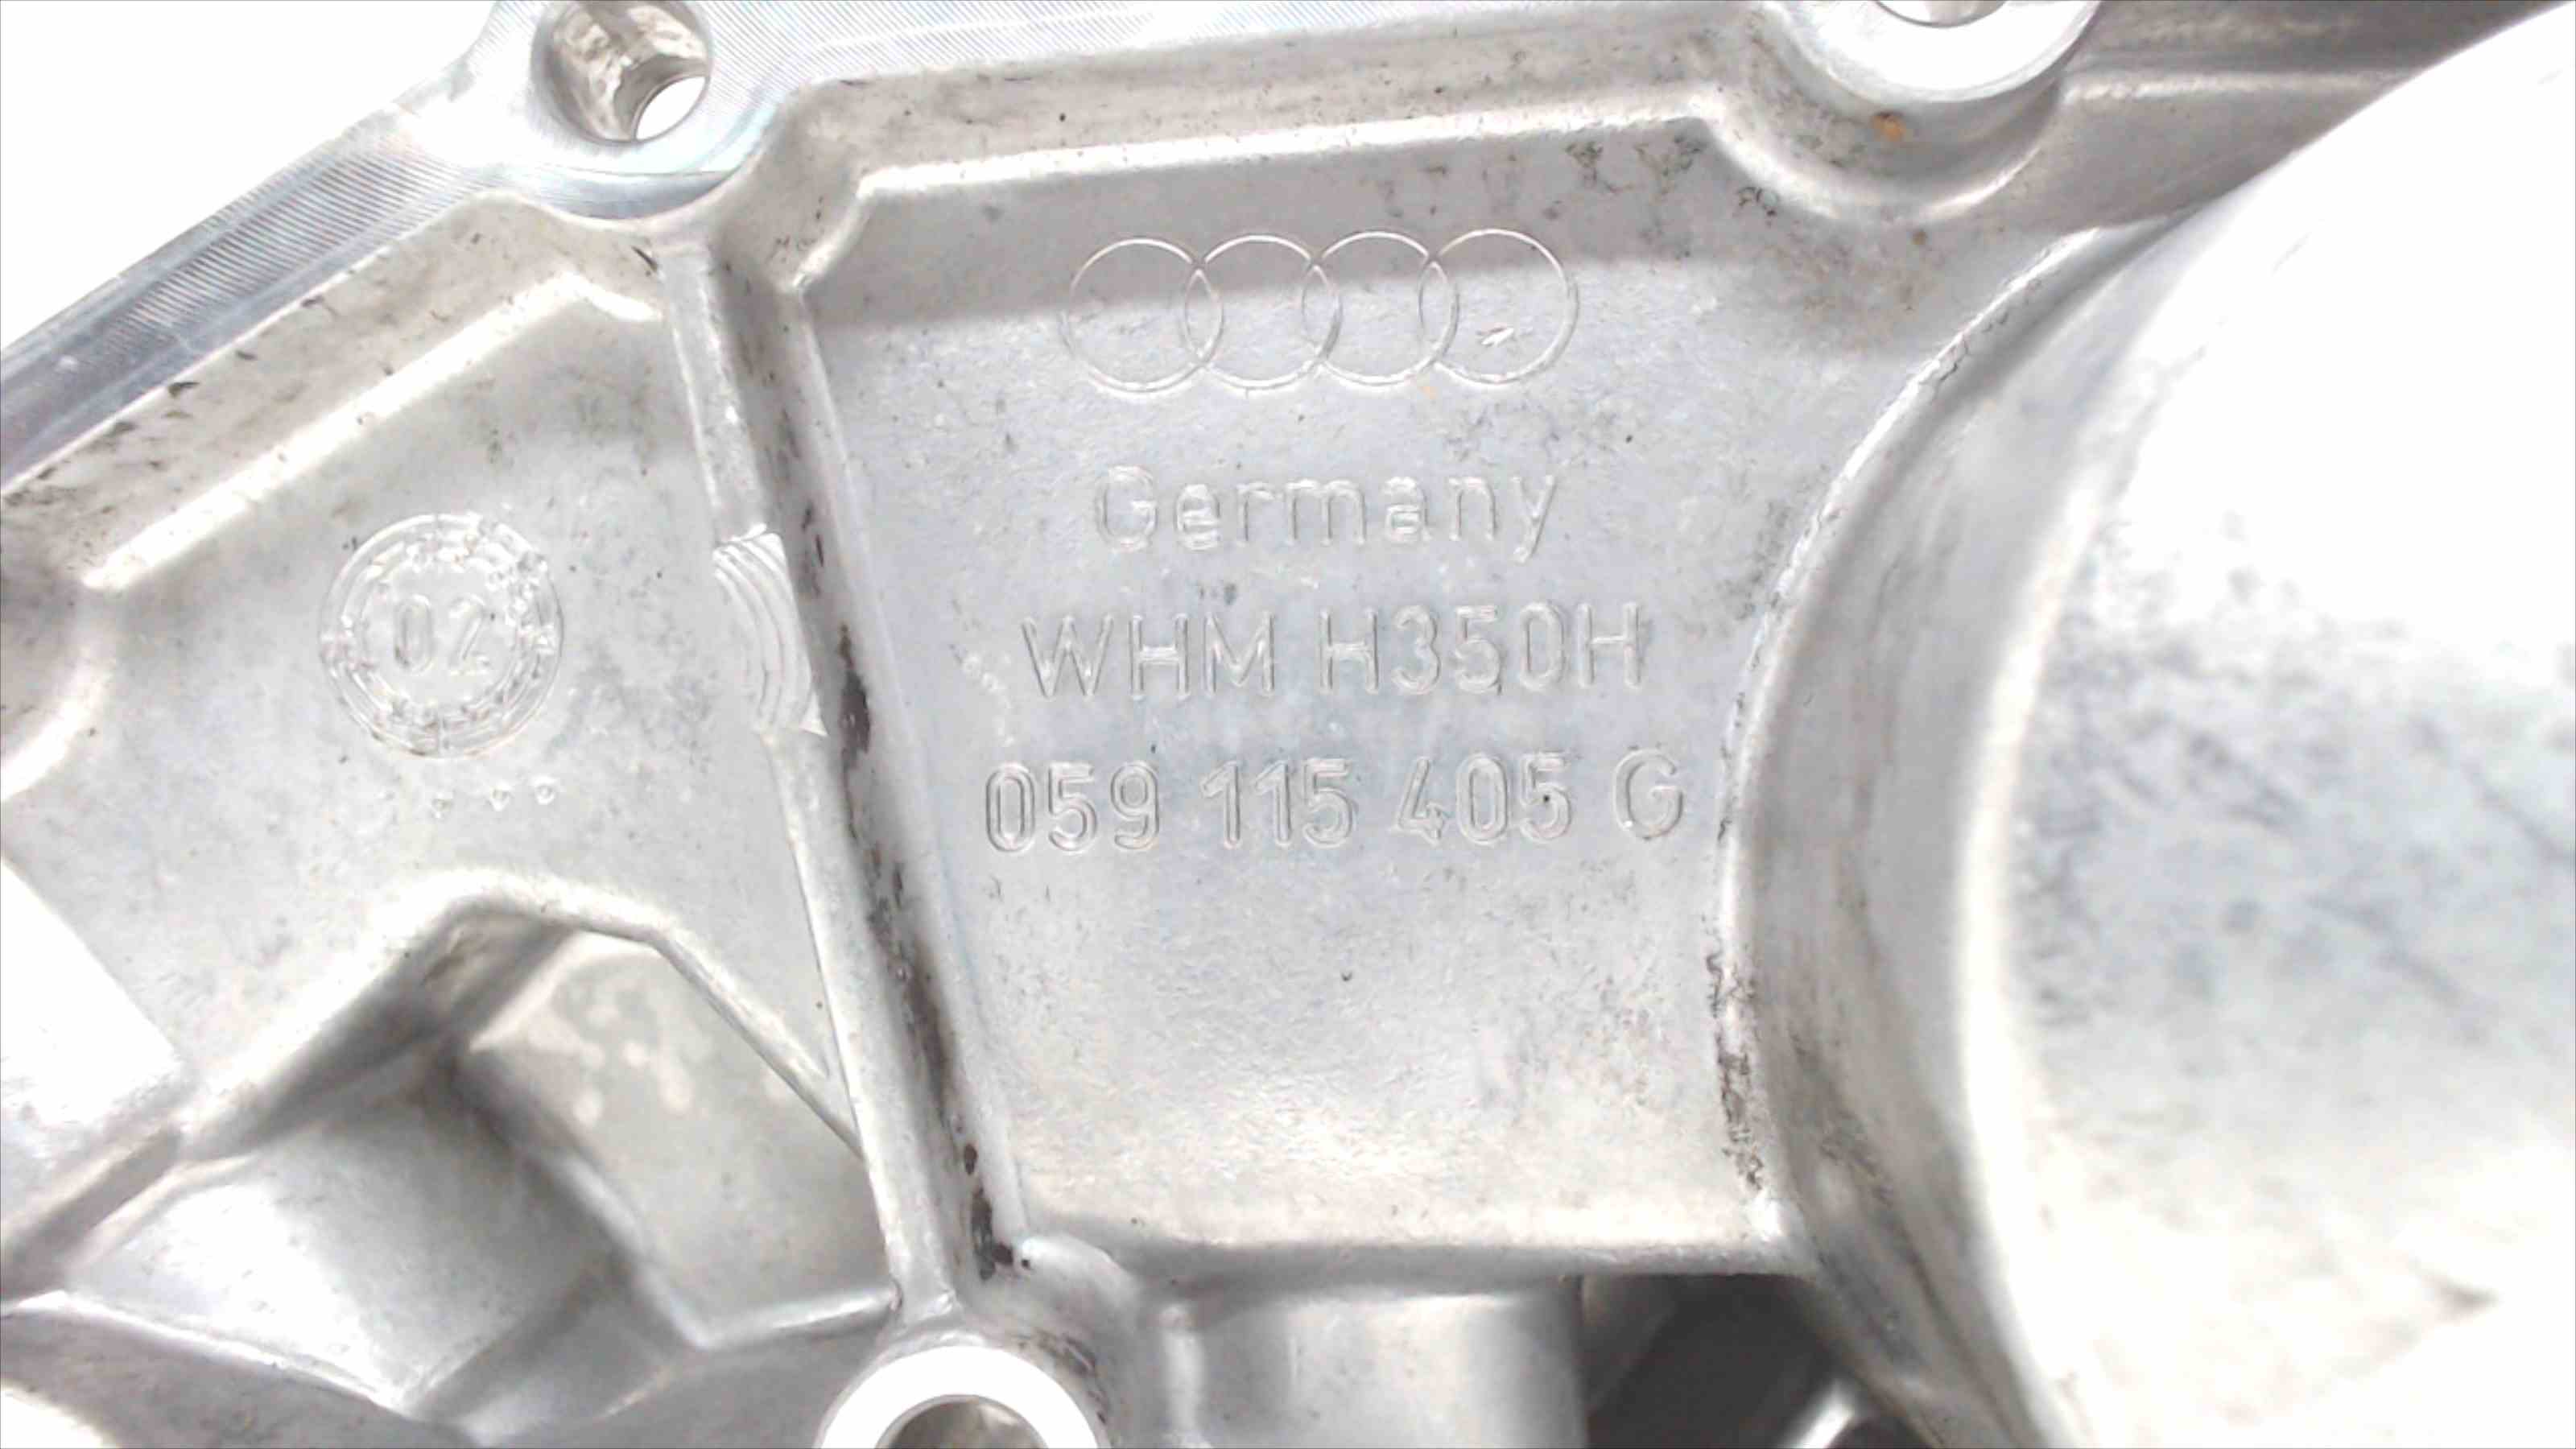 AUDI A6 C5/4B (1997-2004) Oil Cooler 059115405G 24288875